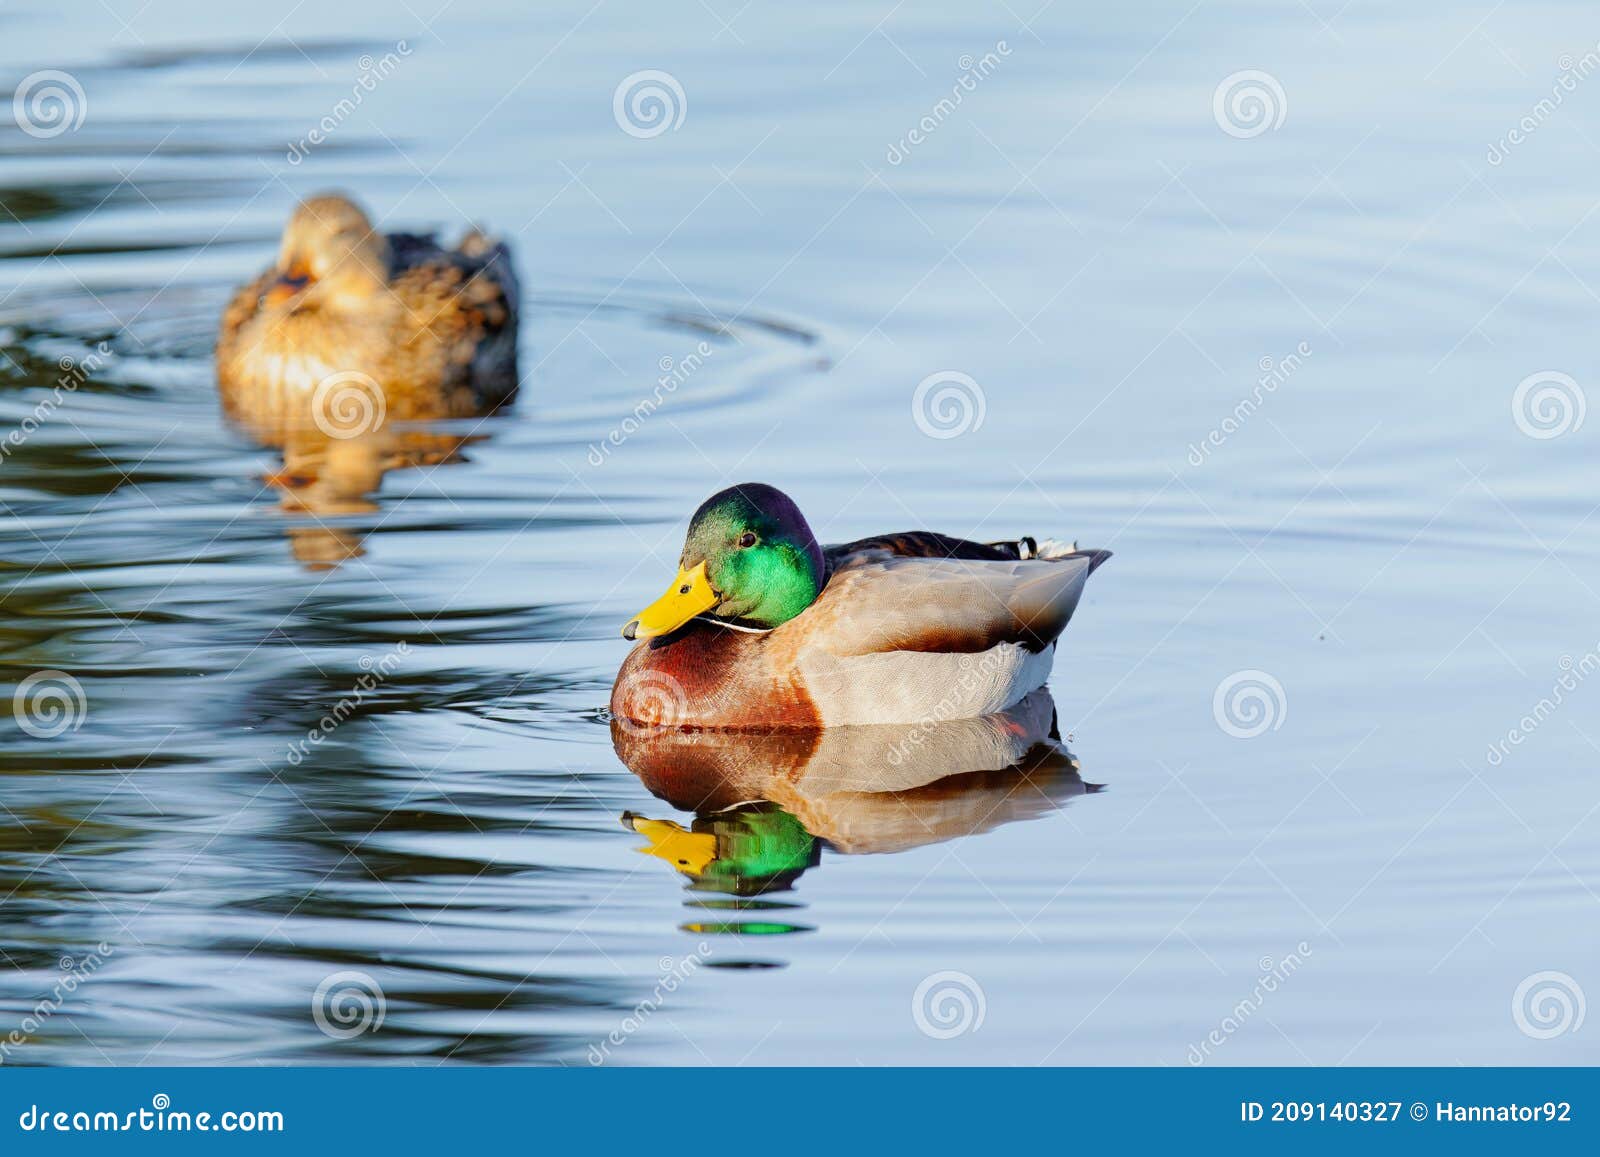 duck floating on water. oso flaco lake  california